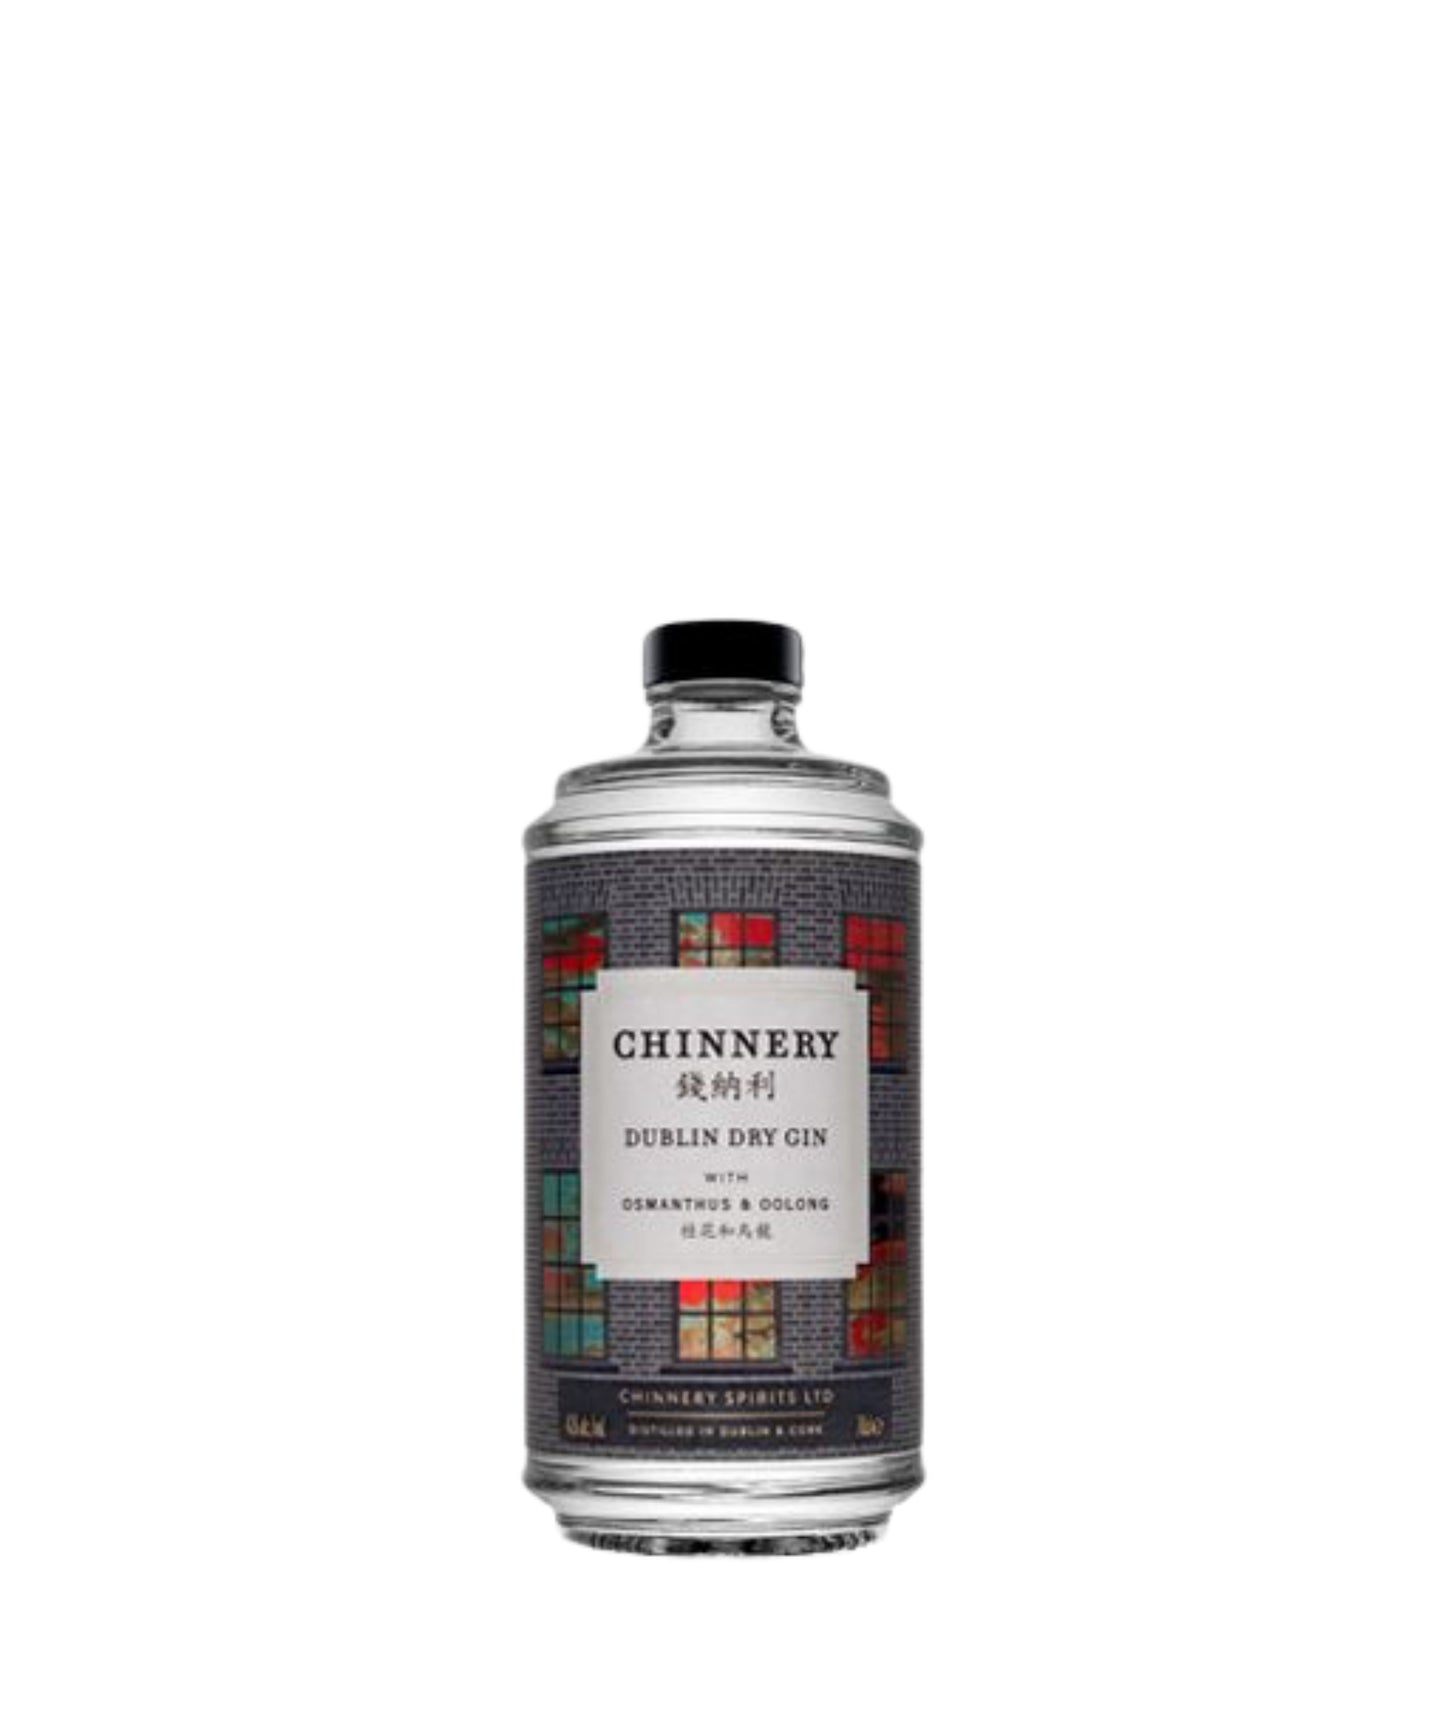 Chinnery Dublin Dry Gin